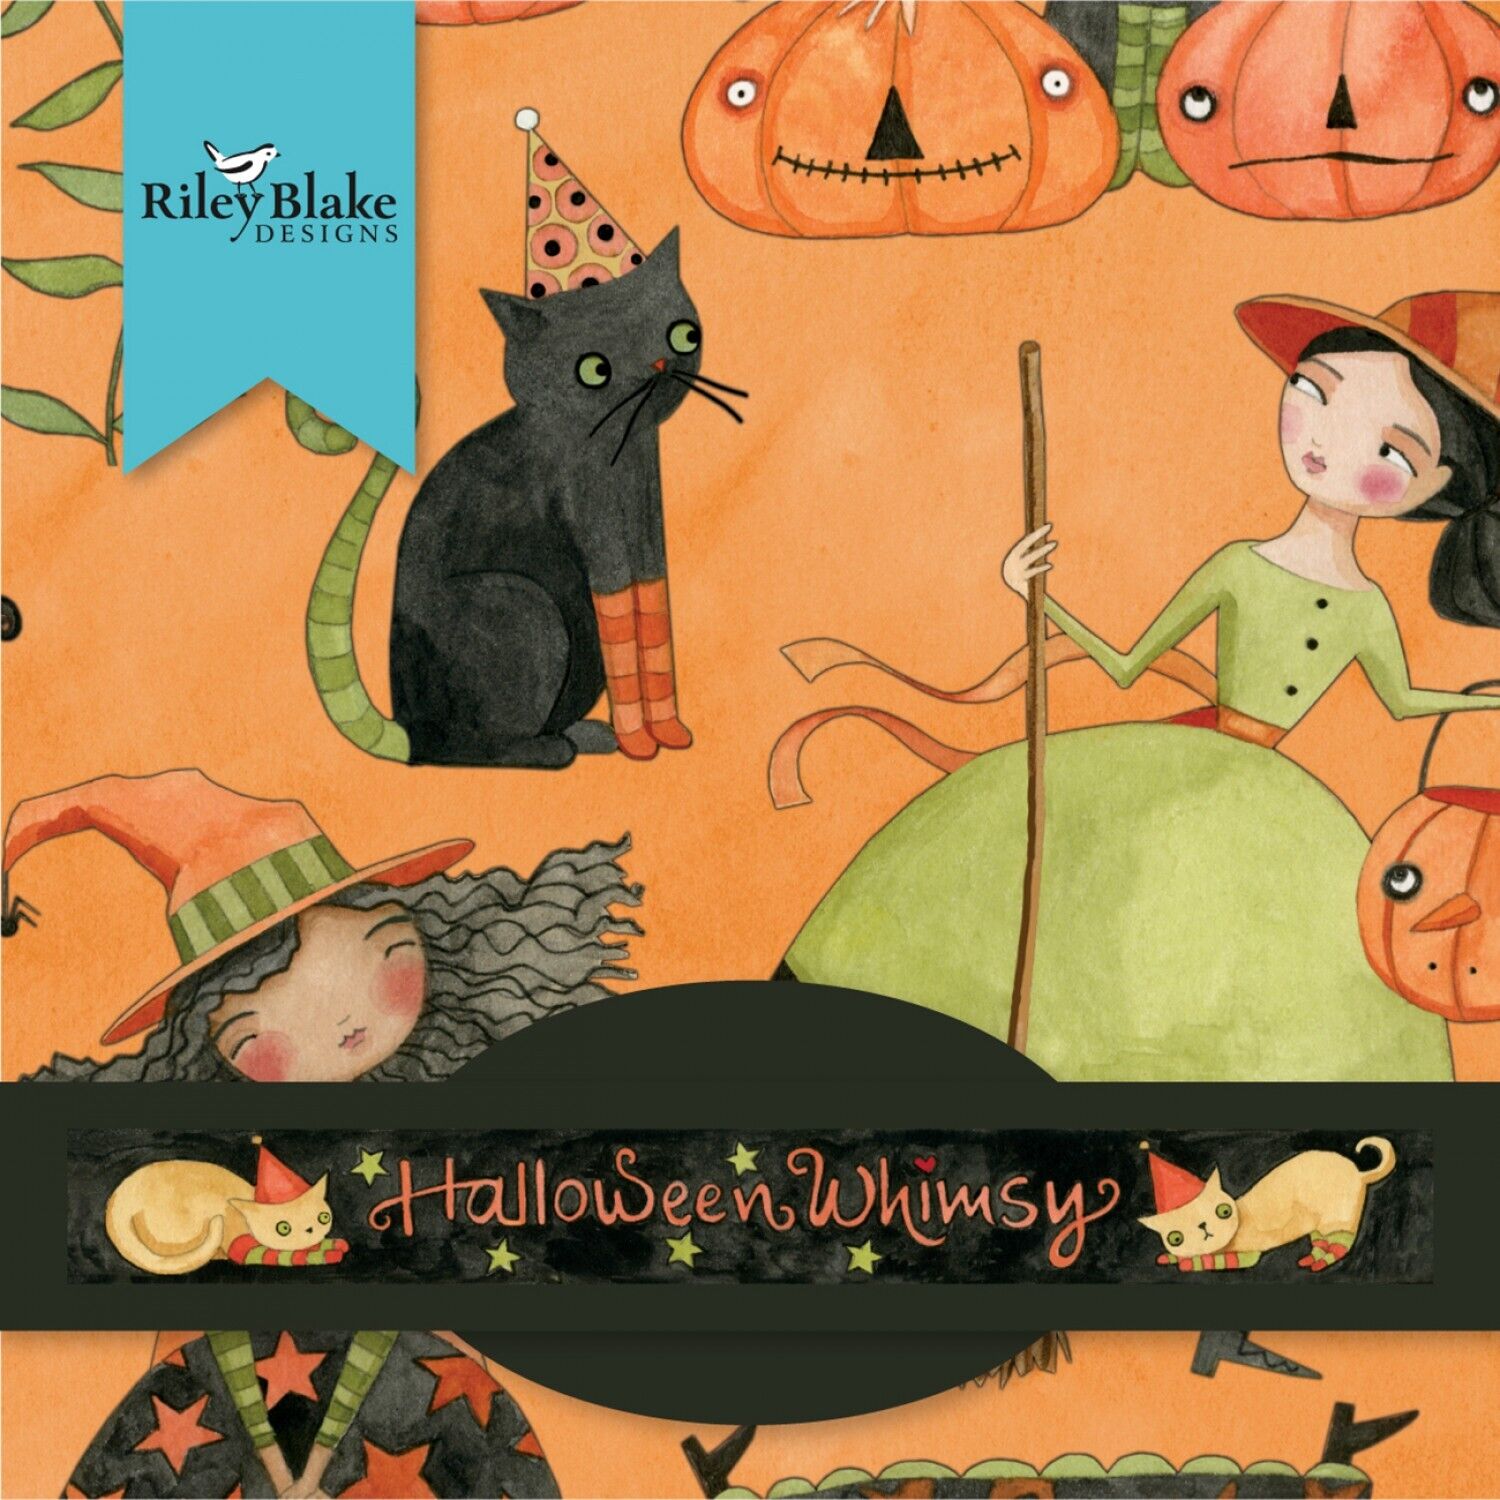 Halloween Whimsy by Riley Blake - Fat Quarter Bundle (27pcs) - Cotton Fabric